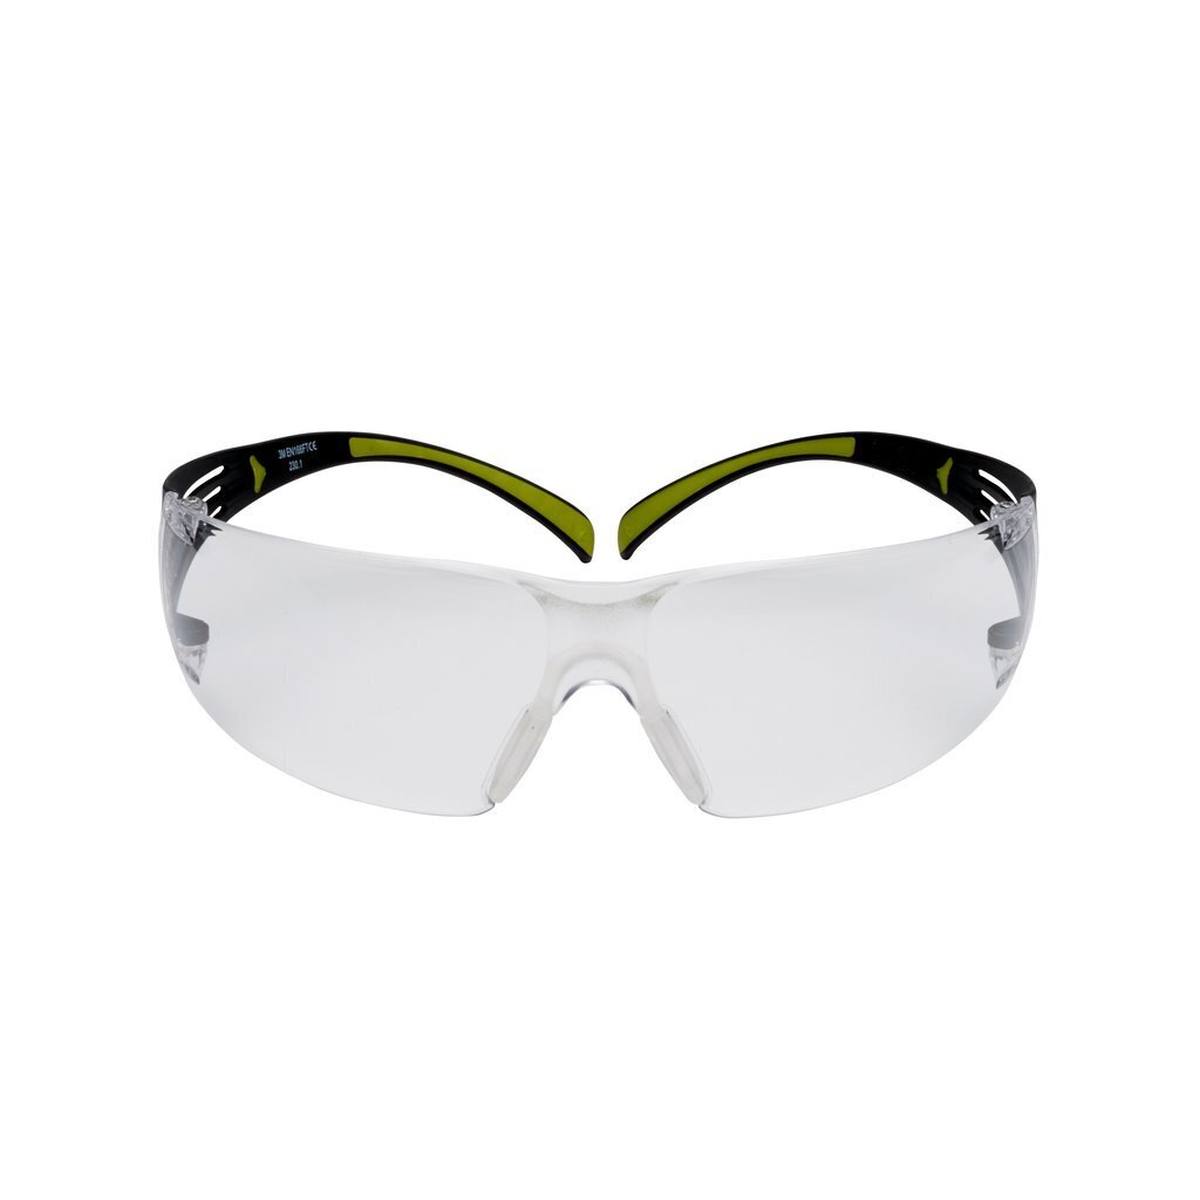 occhiali di sicurezza 3M SecureFit 400, aste nere/verdi, rivestimento antigraffio/antiappannamento, lenti chiare, SF401AS/AF-EU